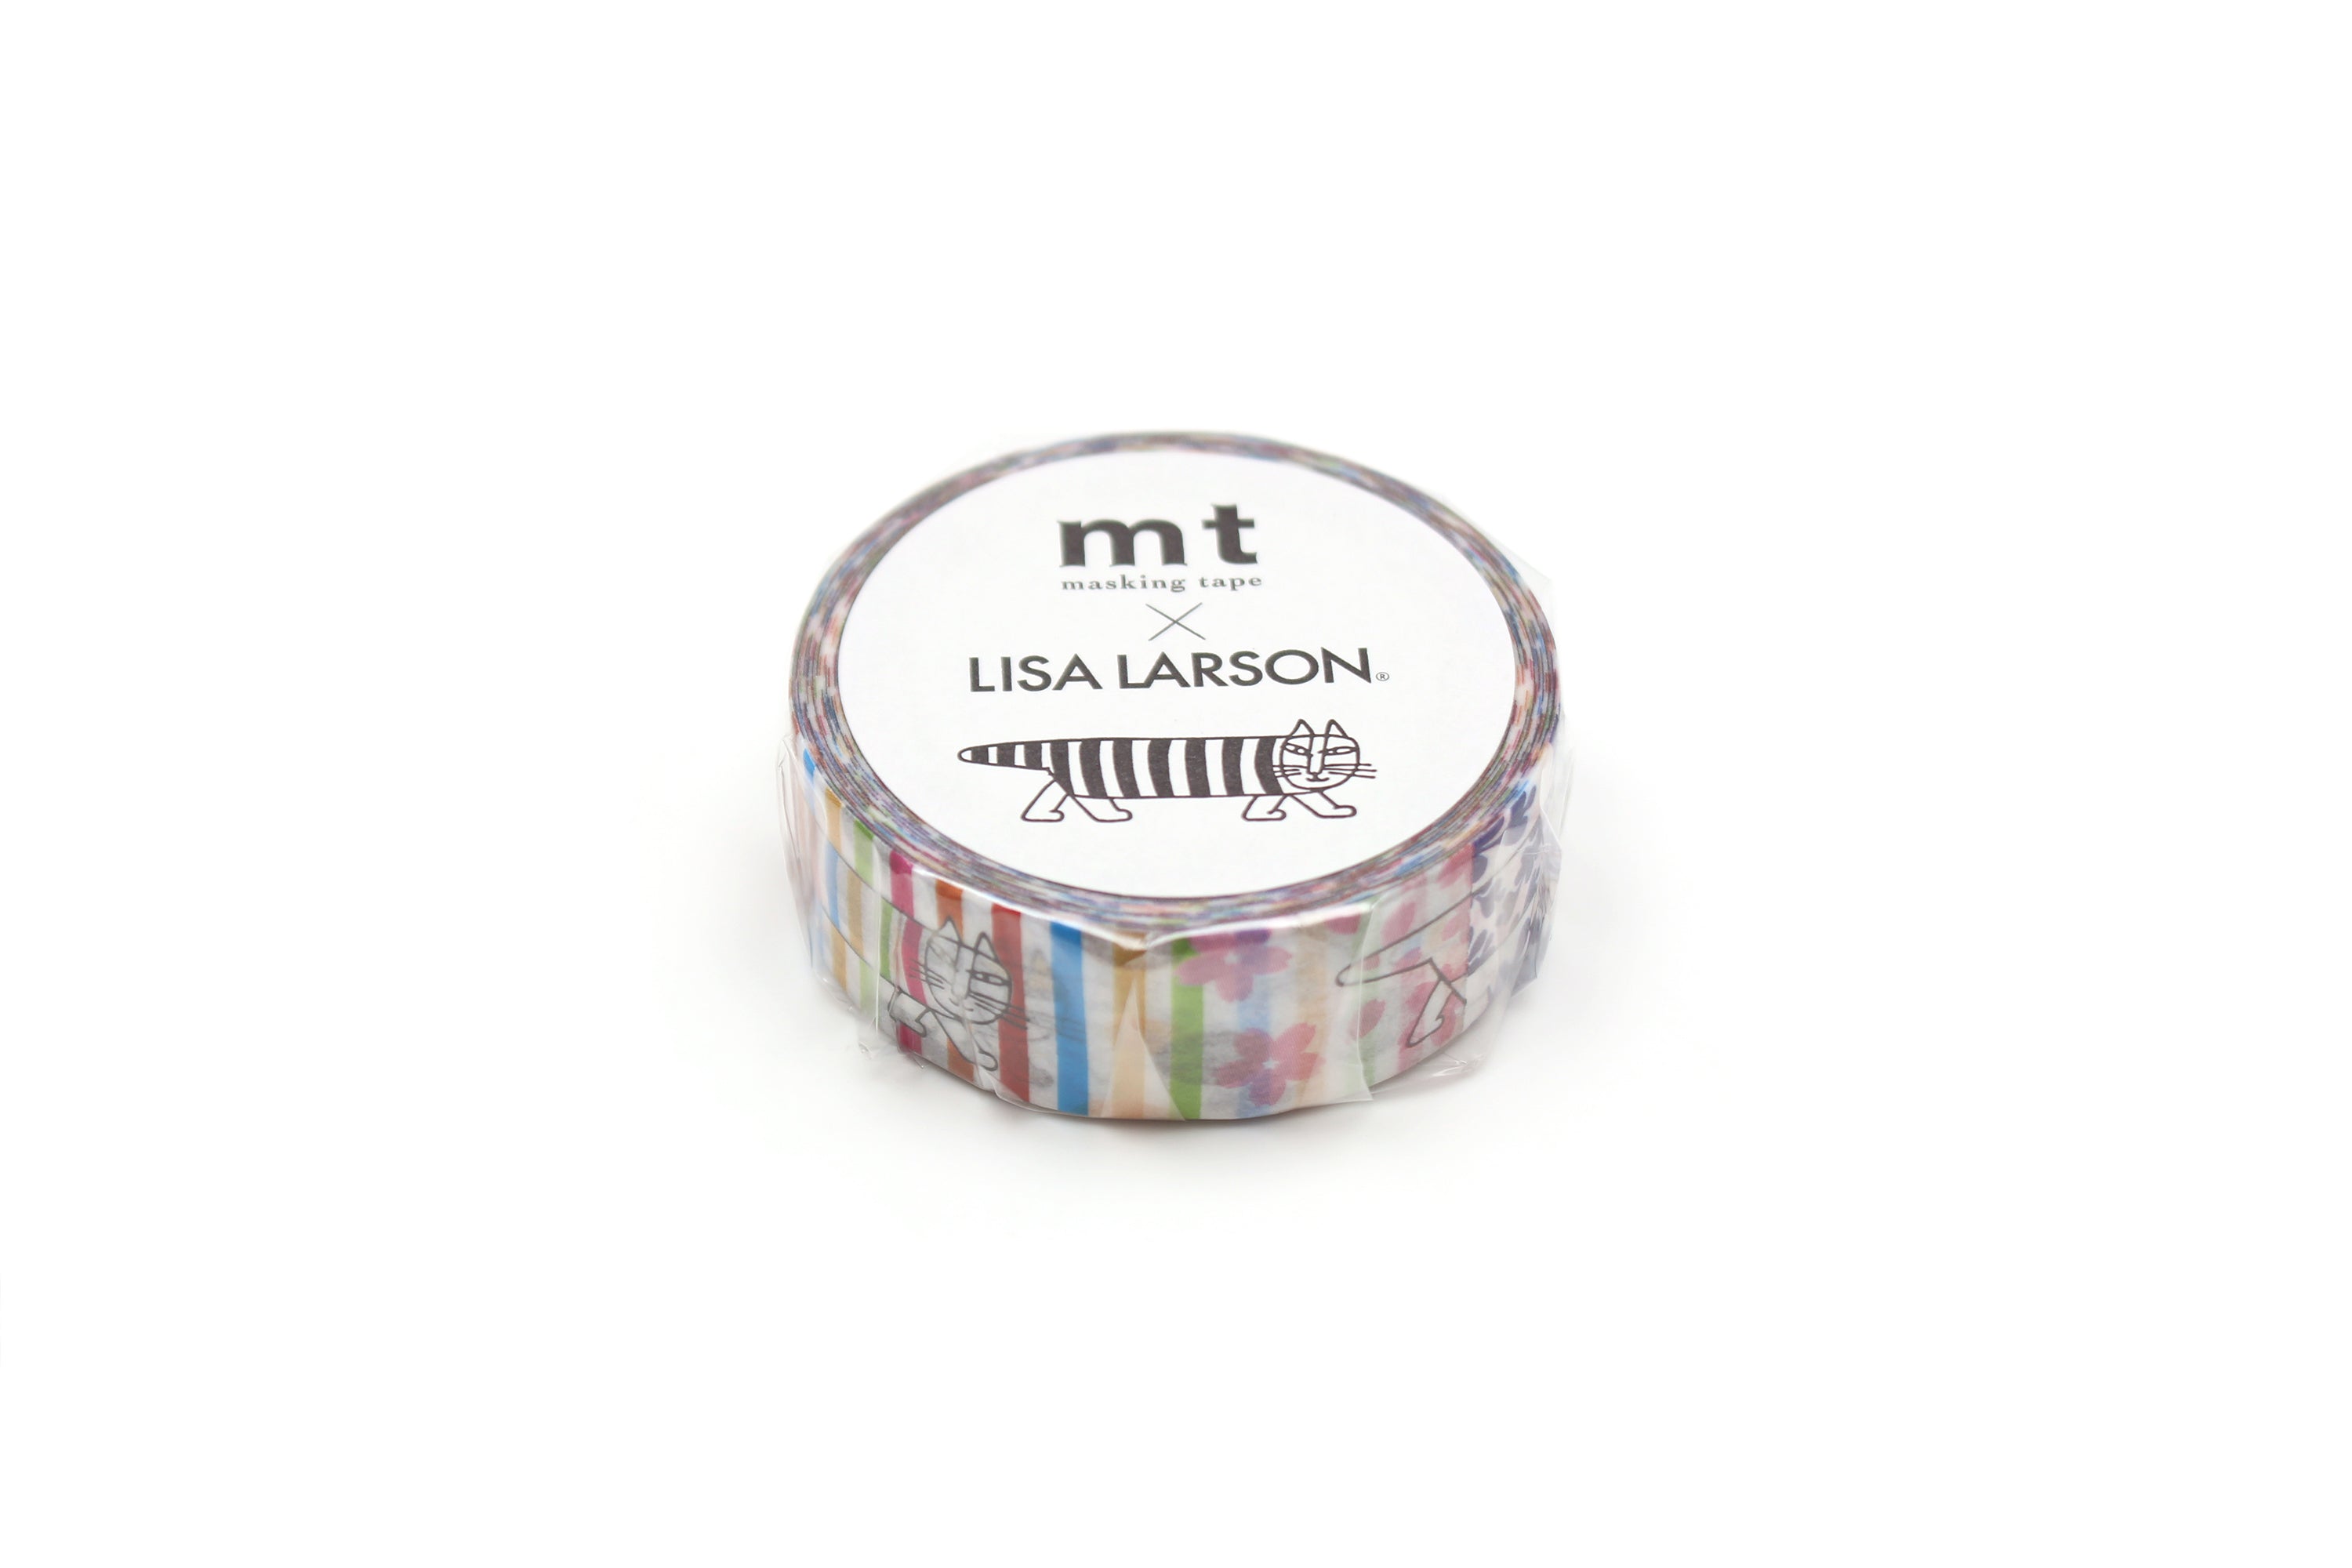 mt x Lisa Larson - Mikey Pattern - 15mm Washi Tape